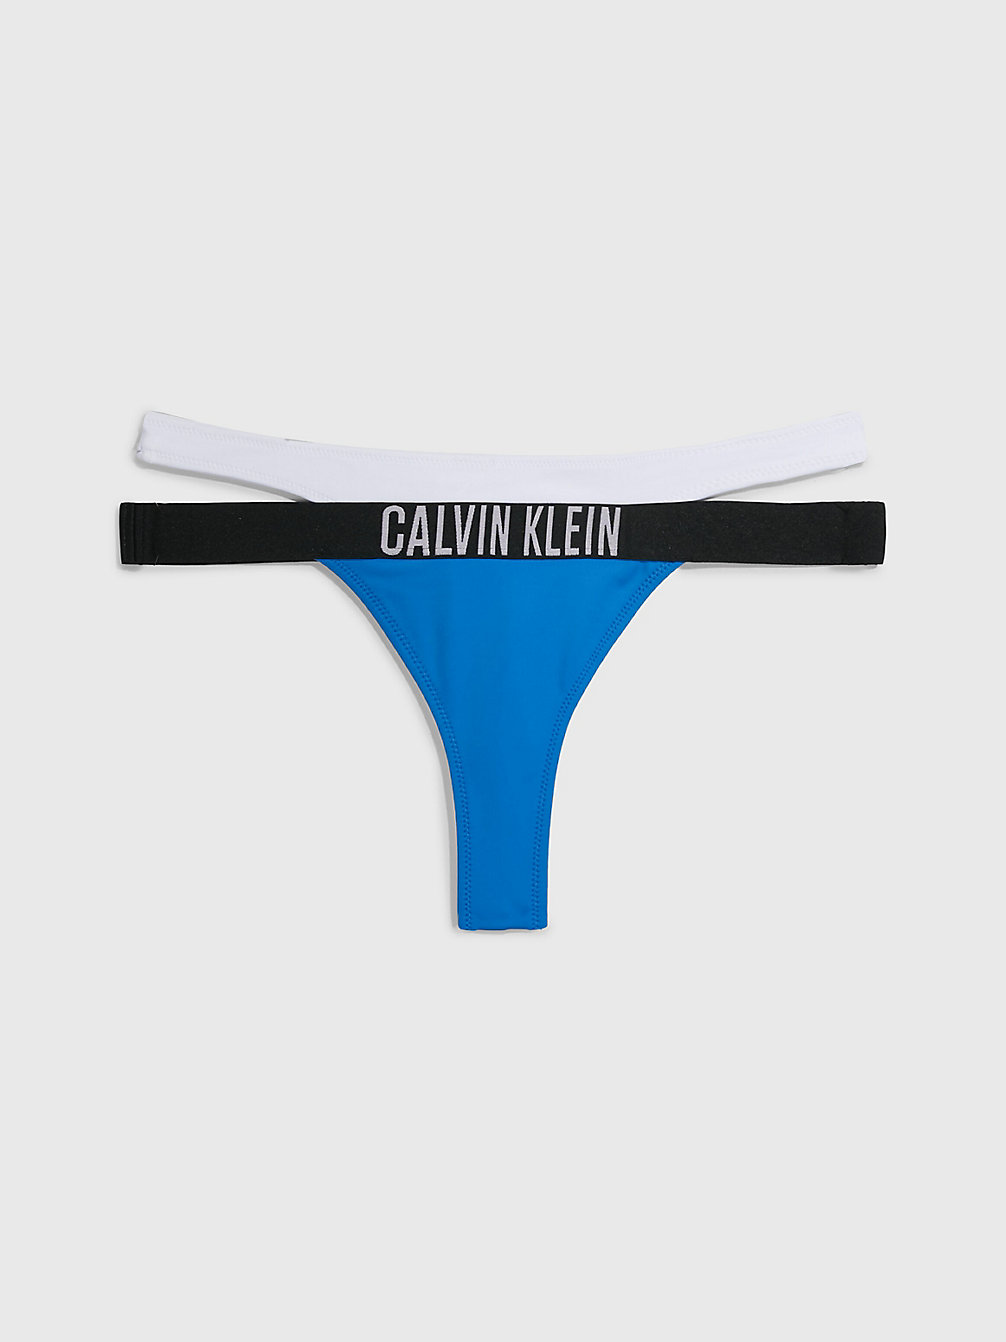 DYNAMIC BLUE Thong Bikinihosen – Intense Power undefined Damen Calvin Klein